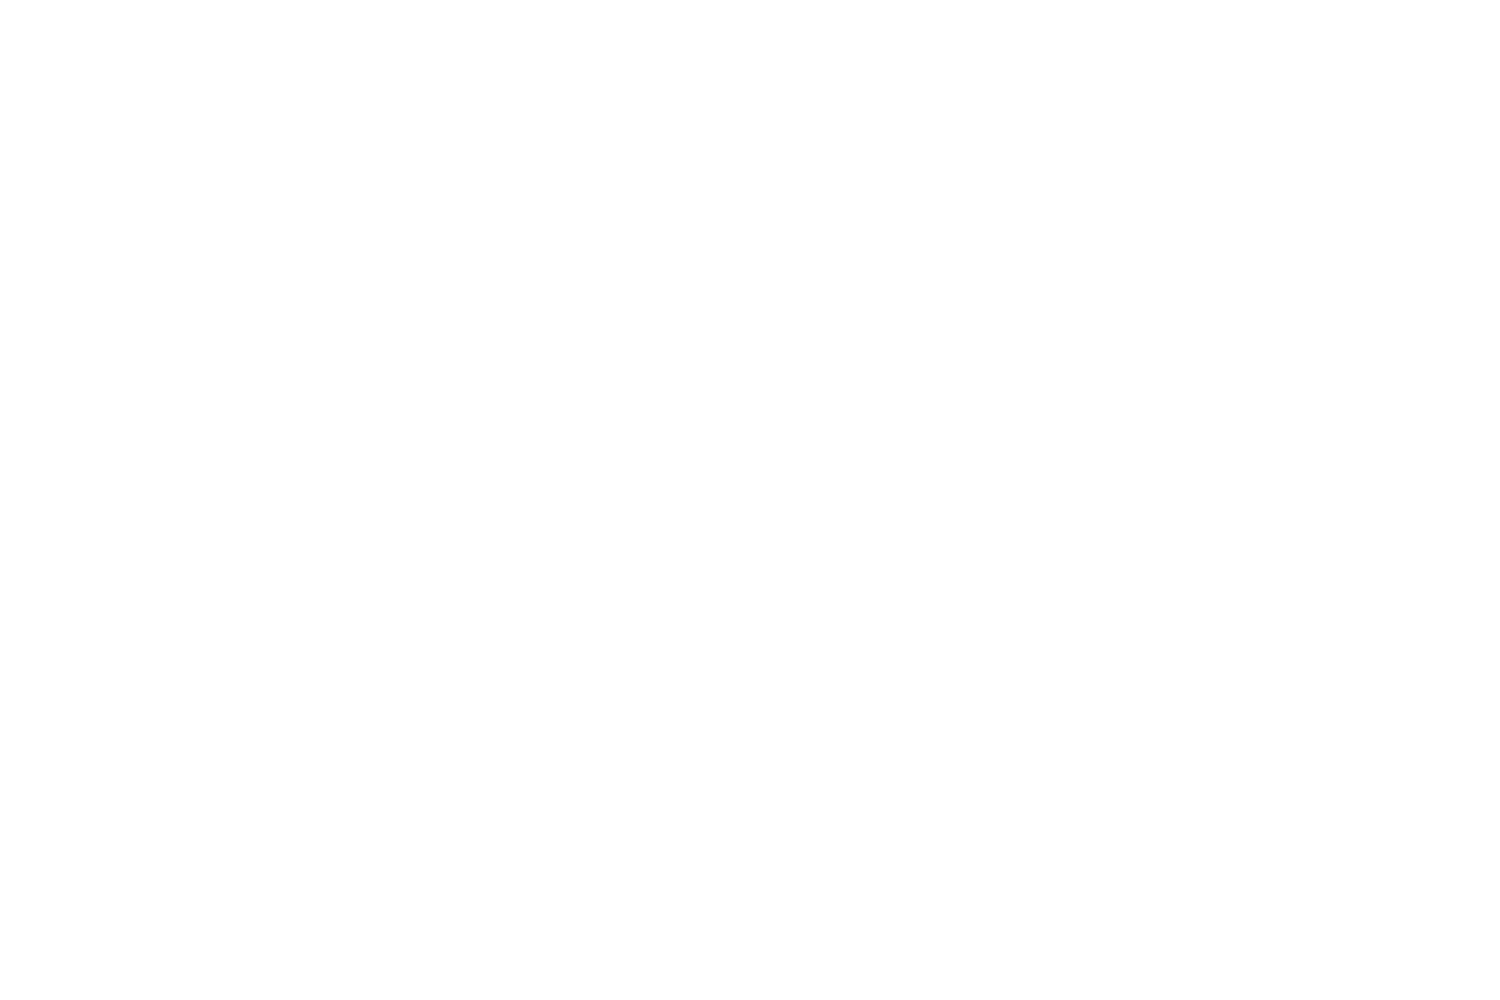 Jessica Lazenby Photography